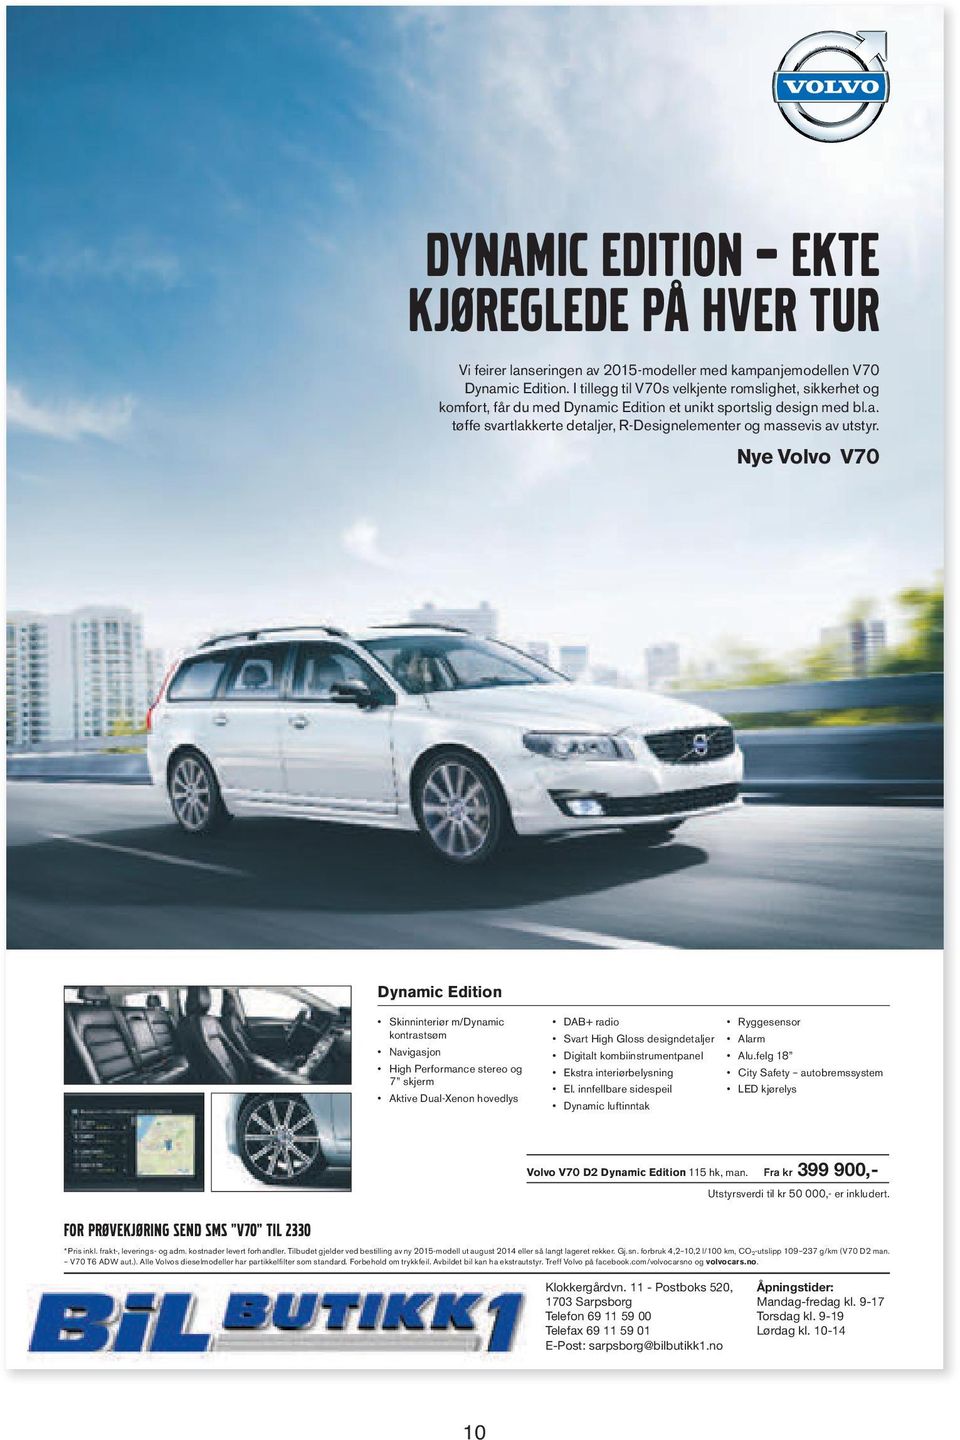 Nye Volvo V70 Dynamic Edition Skinninteriør m/dynamic kontrastsøm Navigasjon High Performance stereo og 7 skjerm Aktive Dual-Xenon hovedlys DAB+ radio Svart High Gloss designdetaljer Digitalt